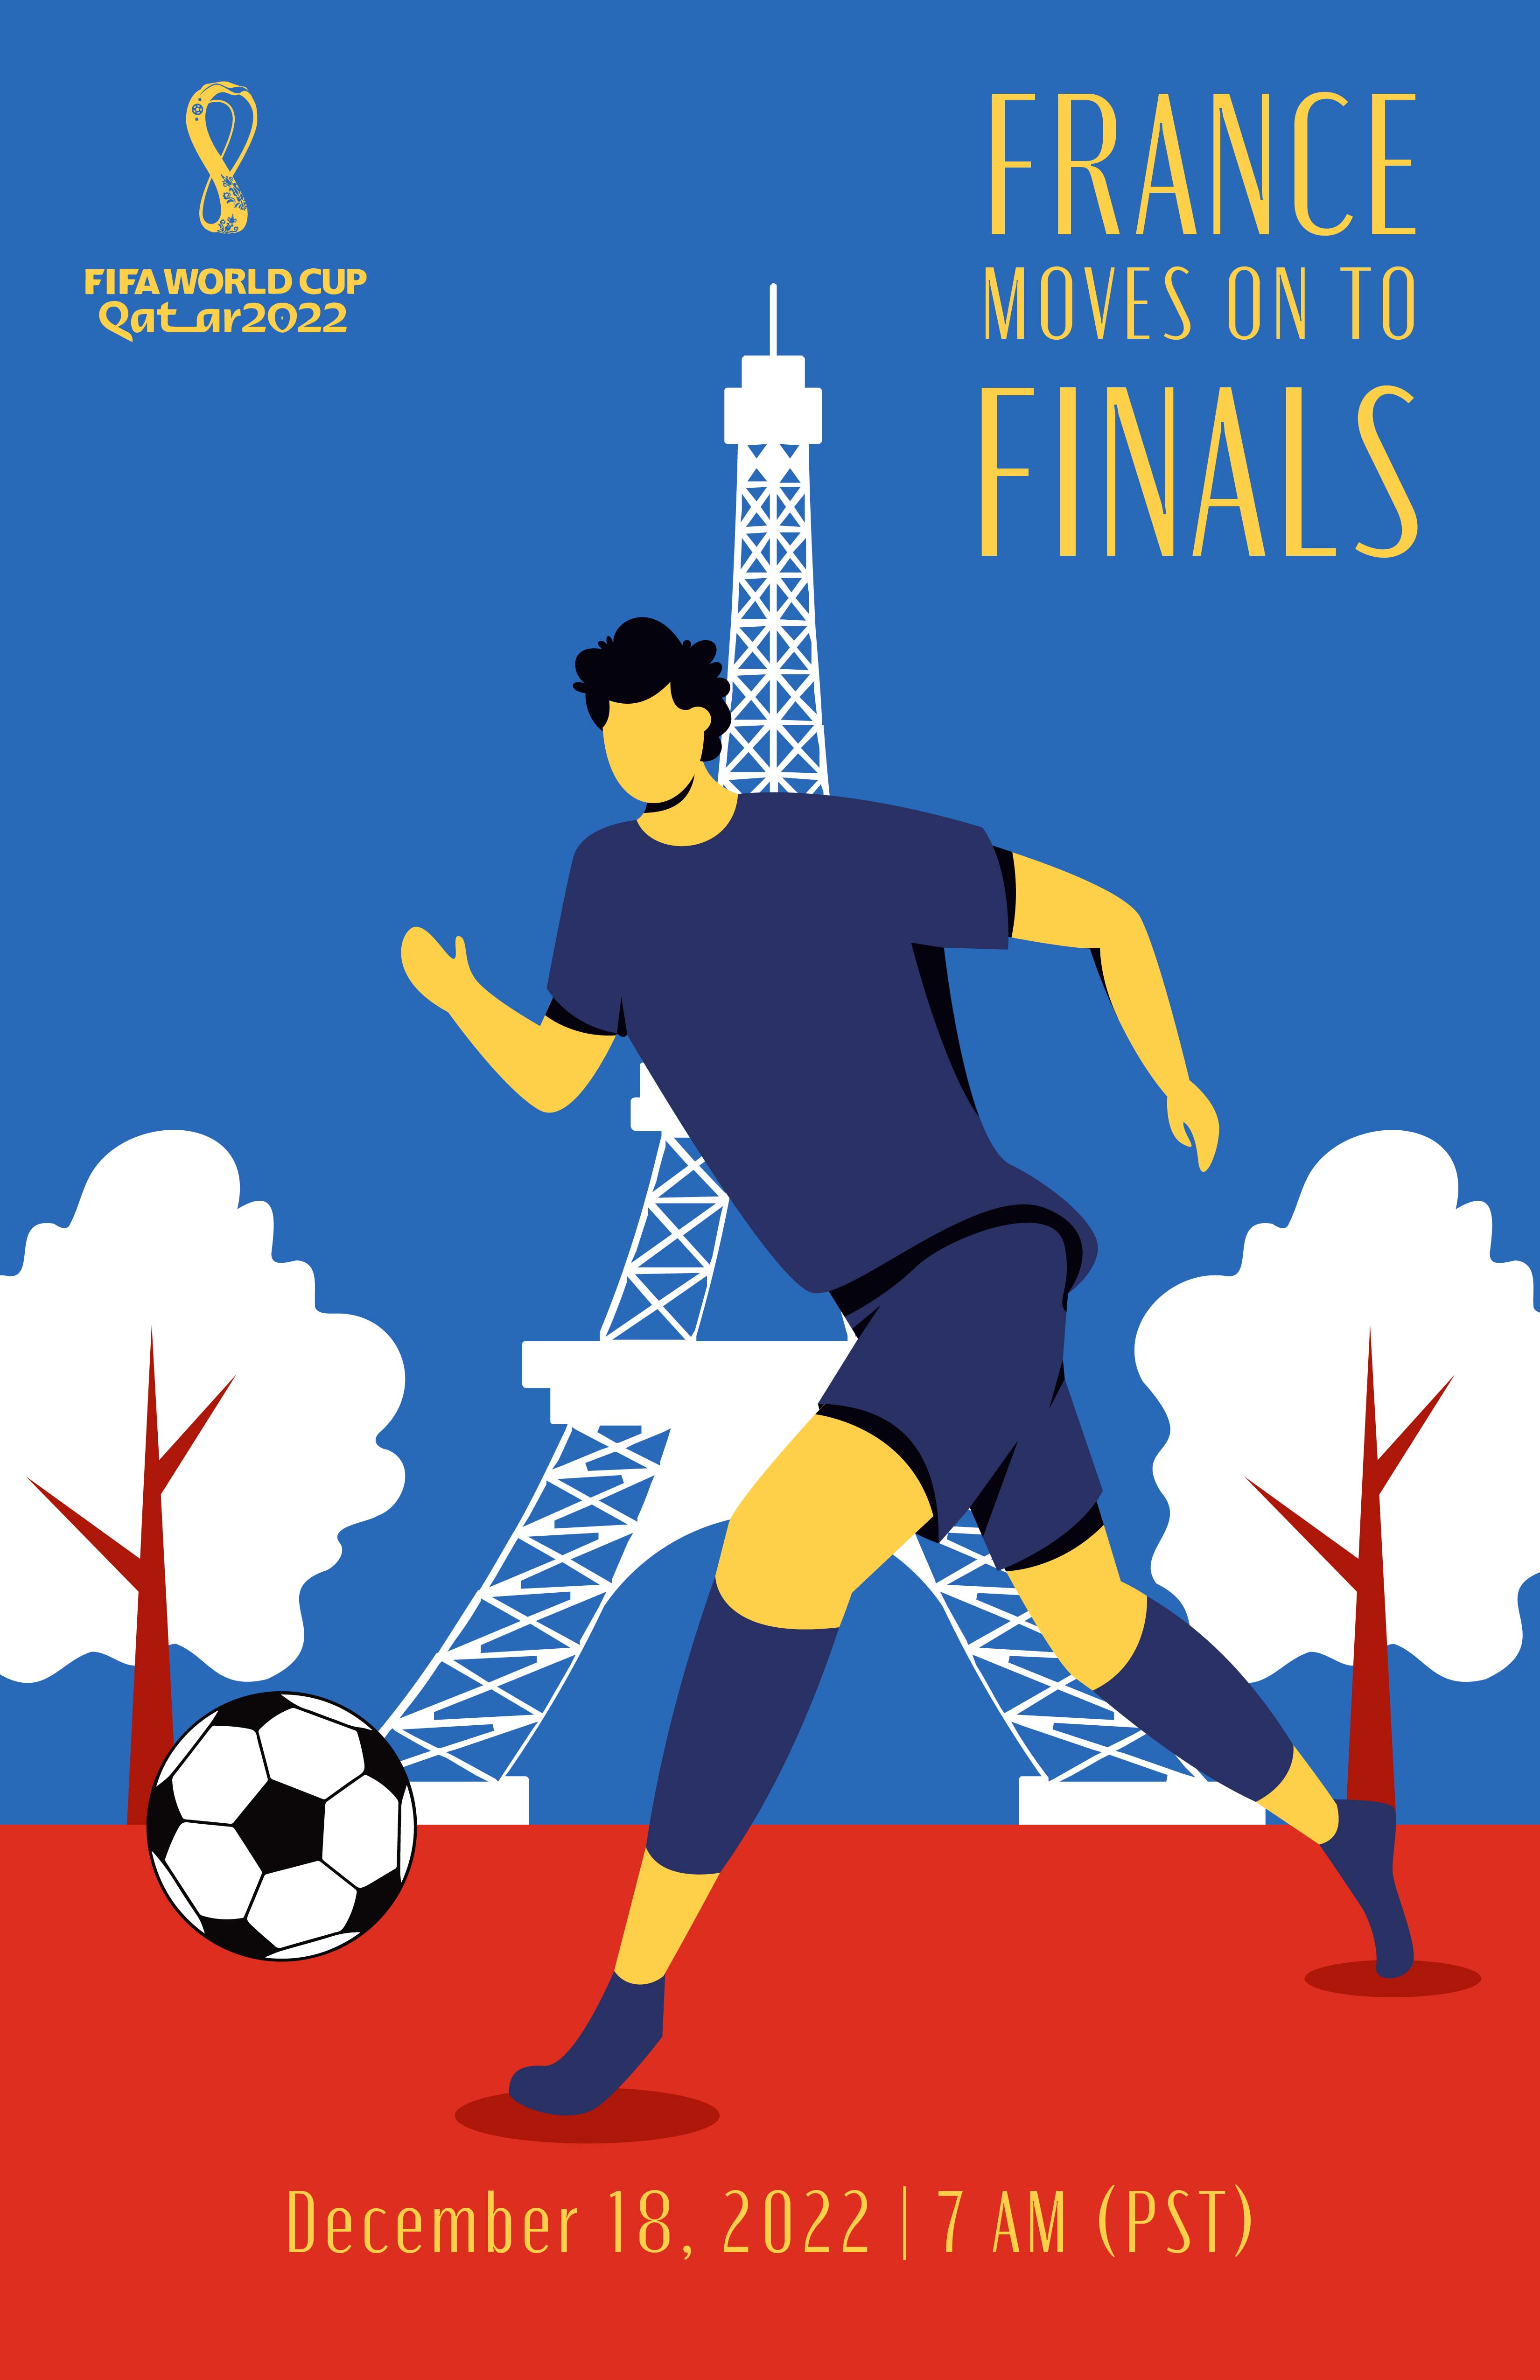 2022 World Cup Bracket, Free Downloadable PDF